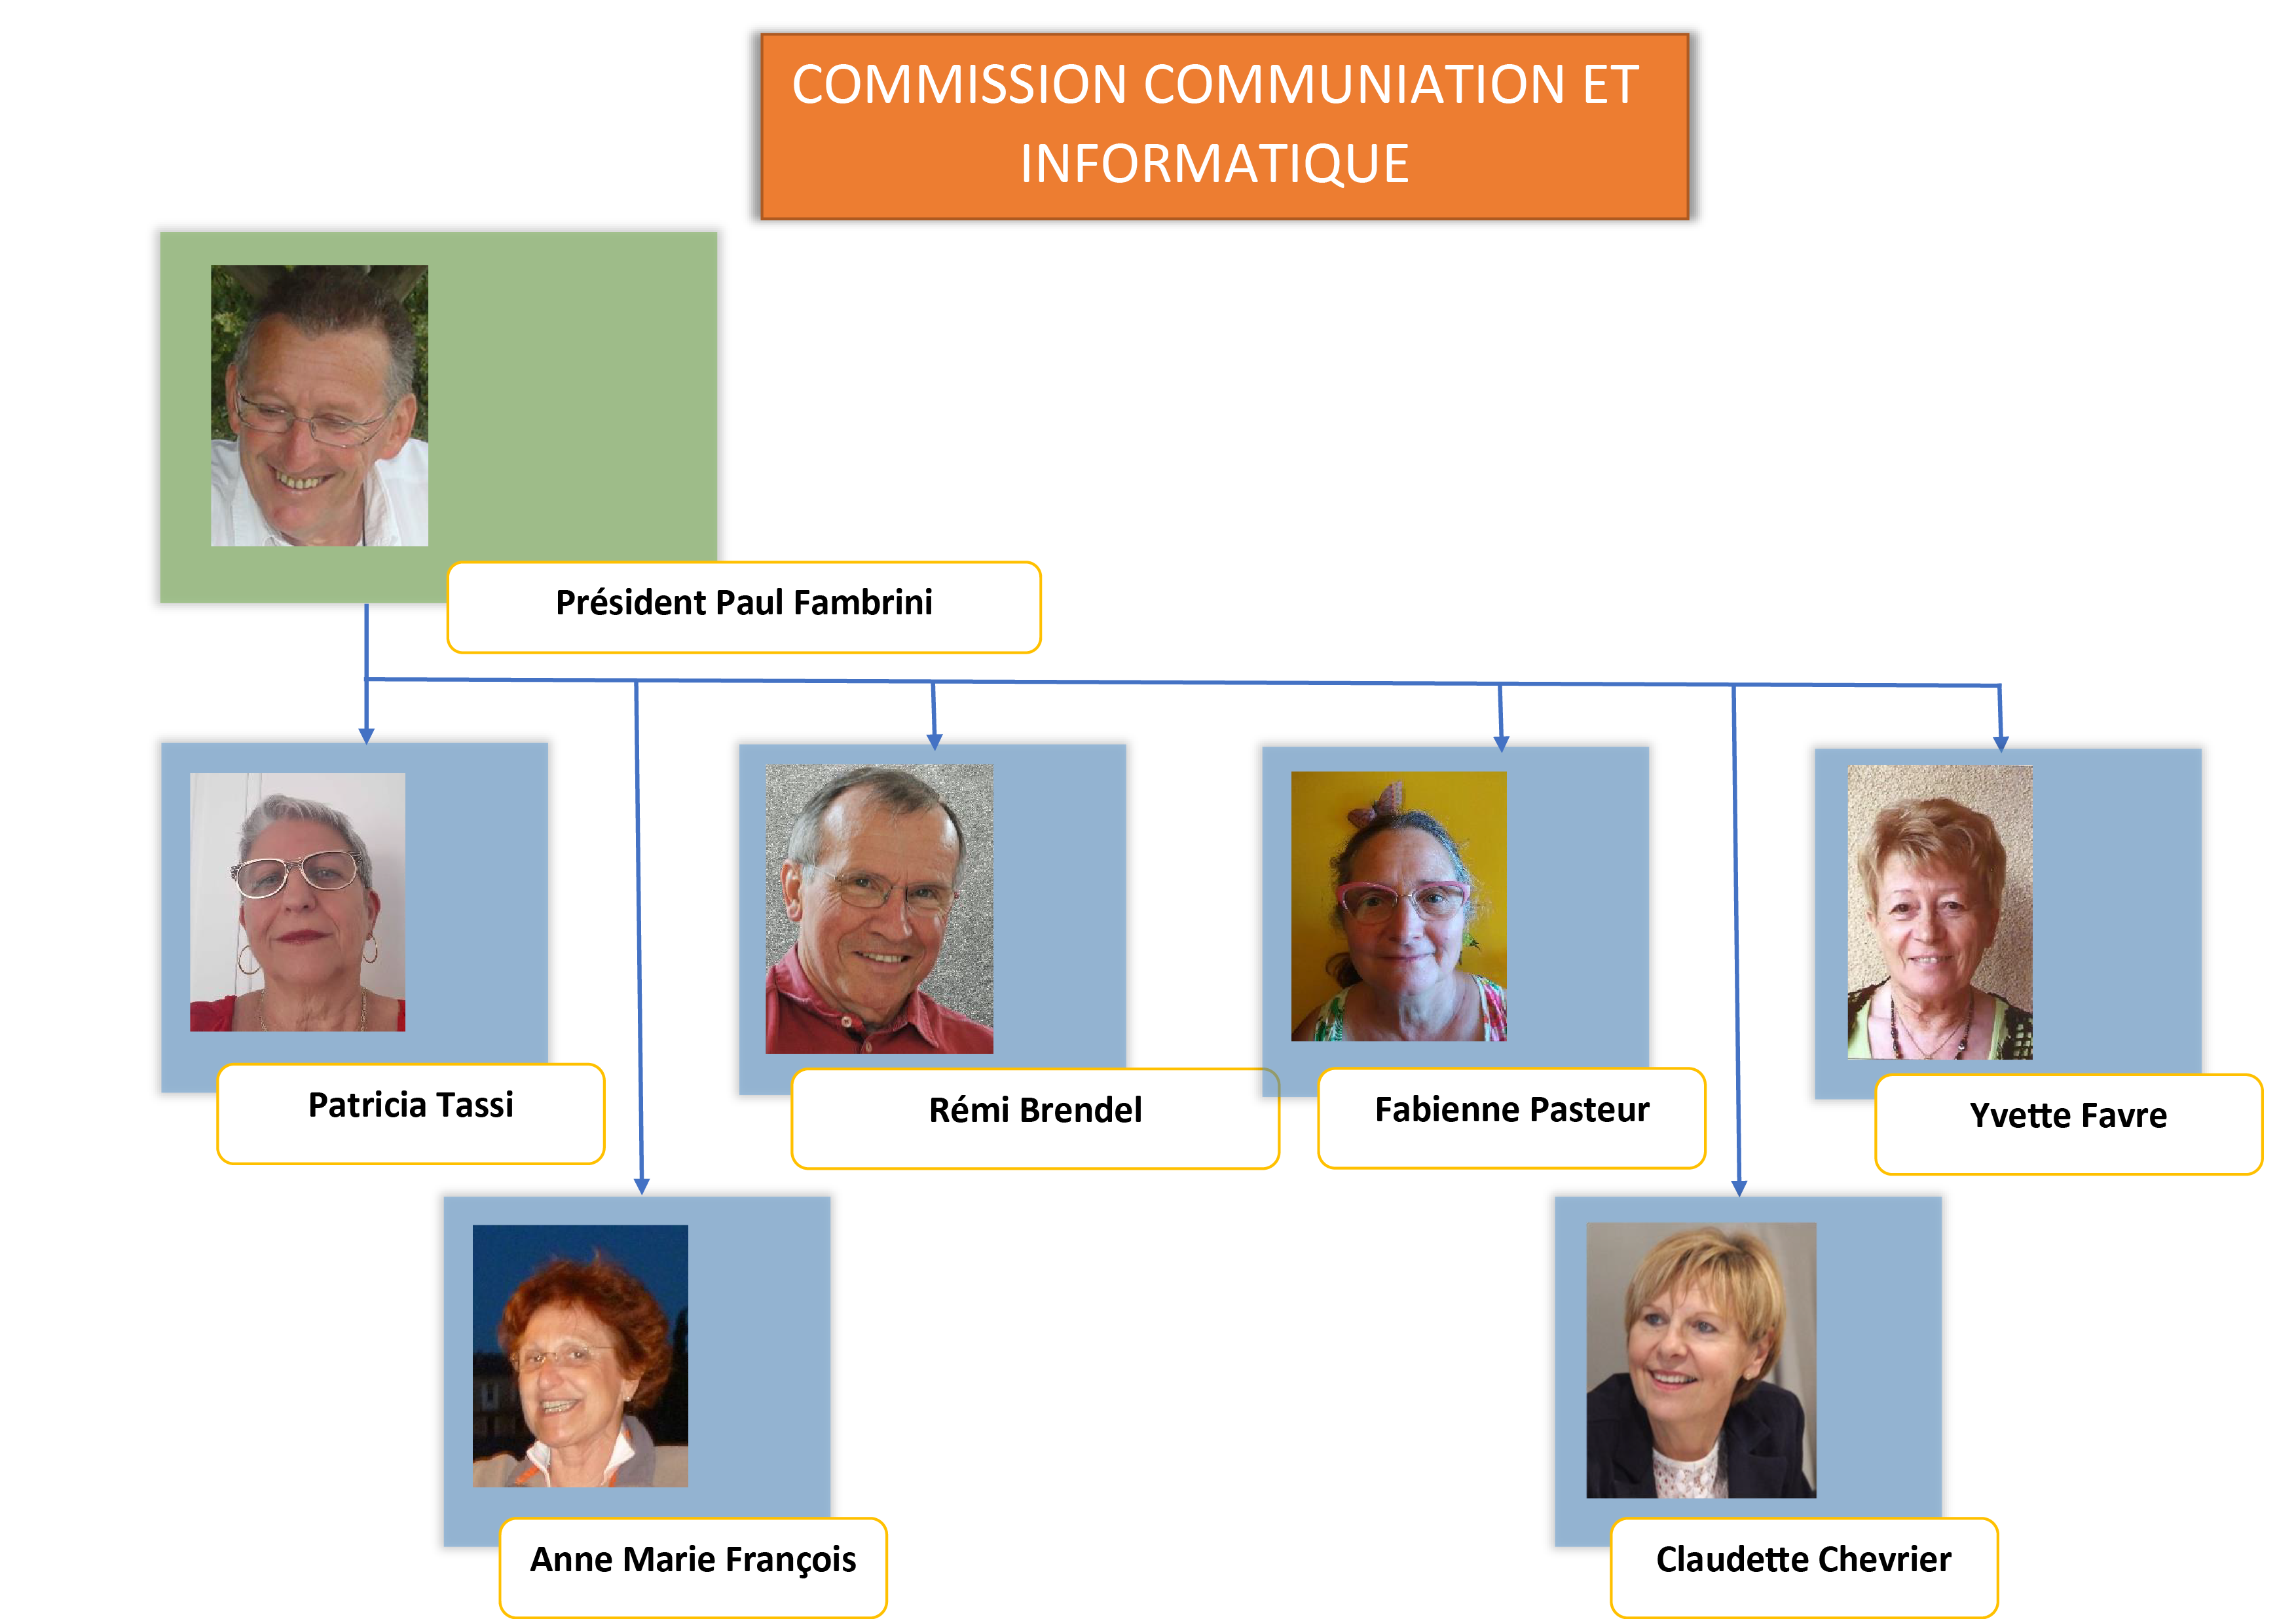 Commission Communication